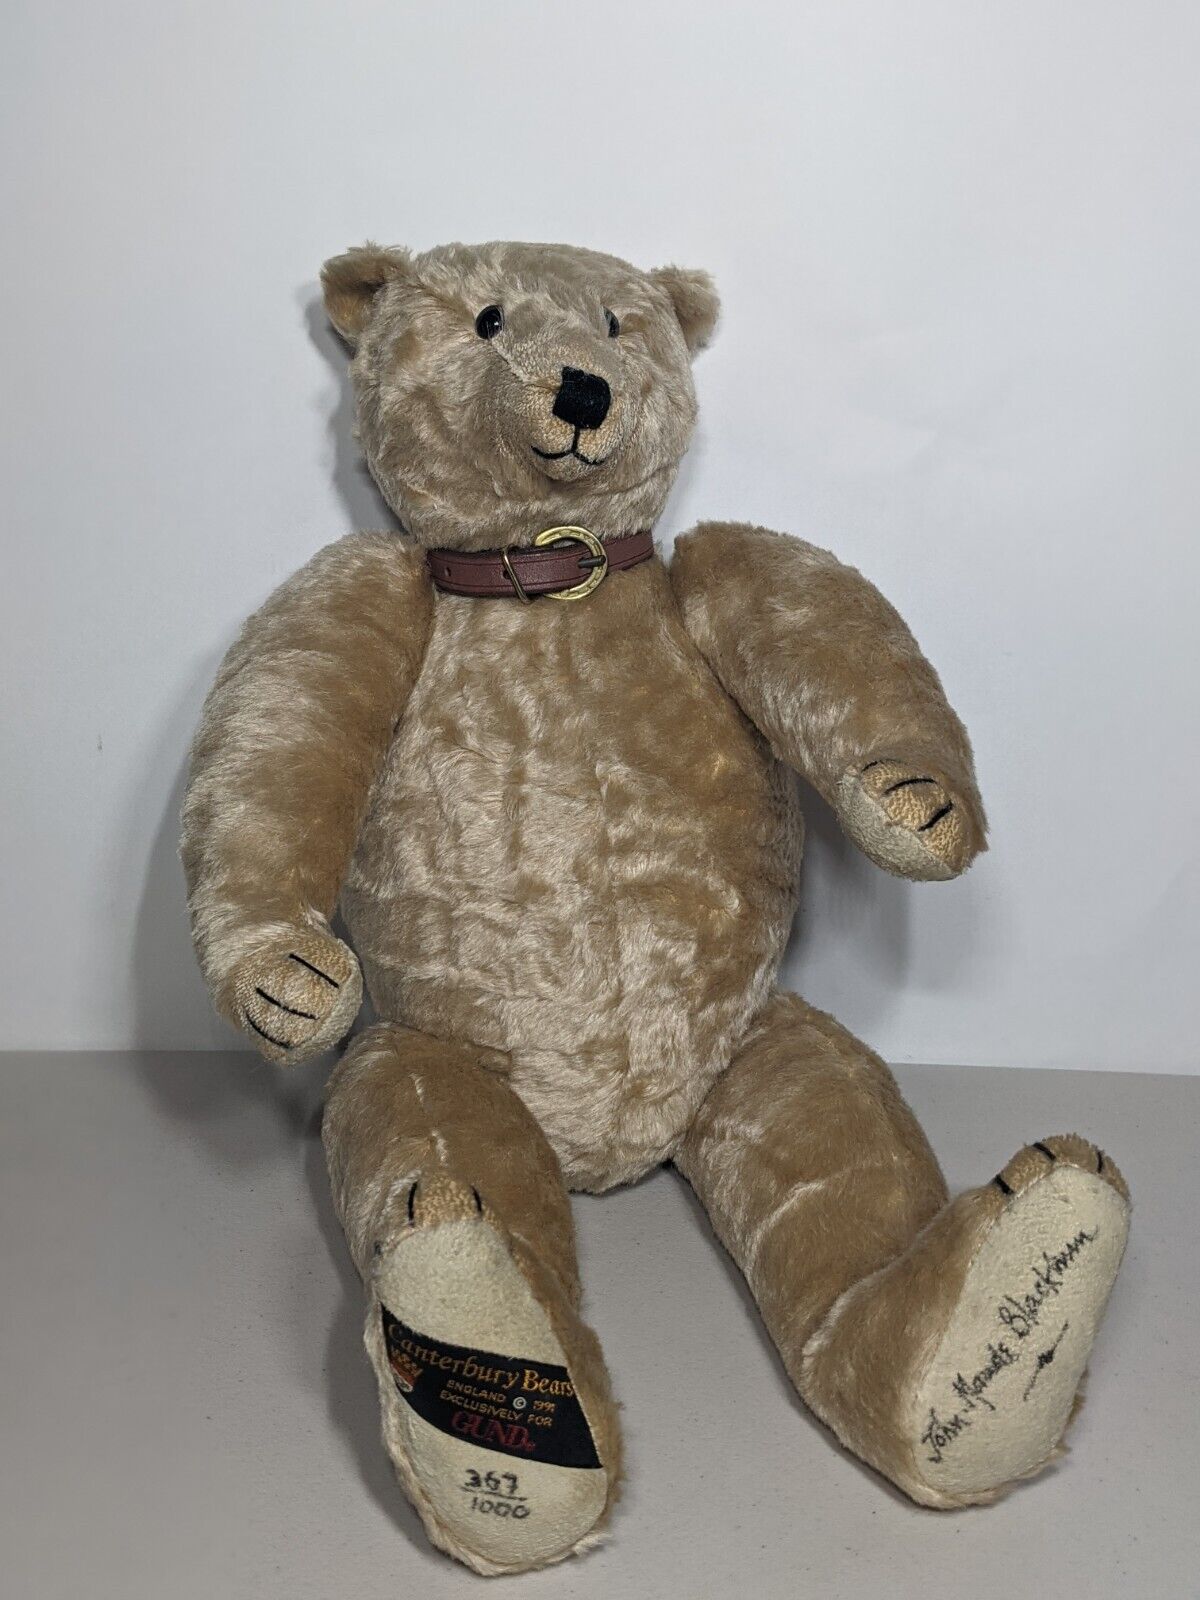 Rare 1991 Canterbury Bears England GUND Teddy Bear Ltd. 367/1000 Artist Signed